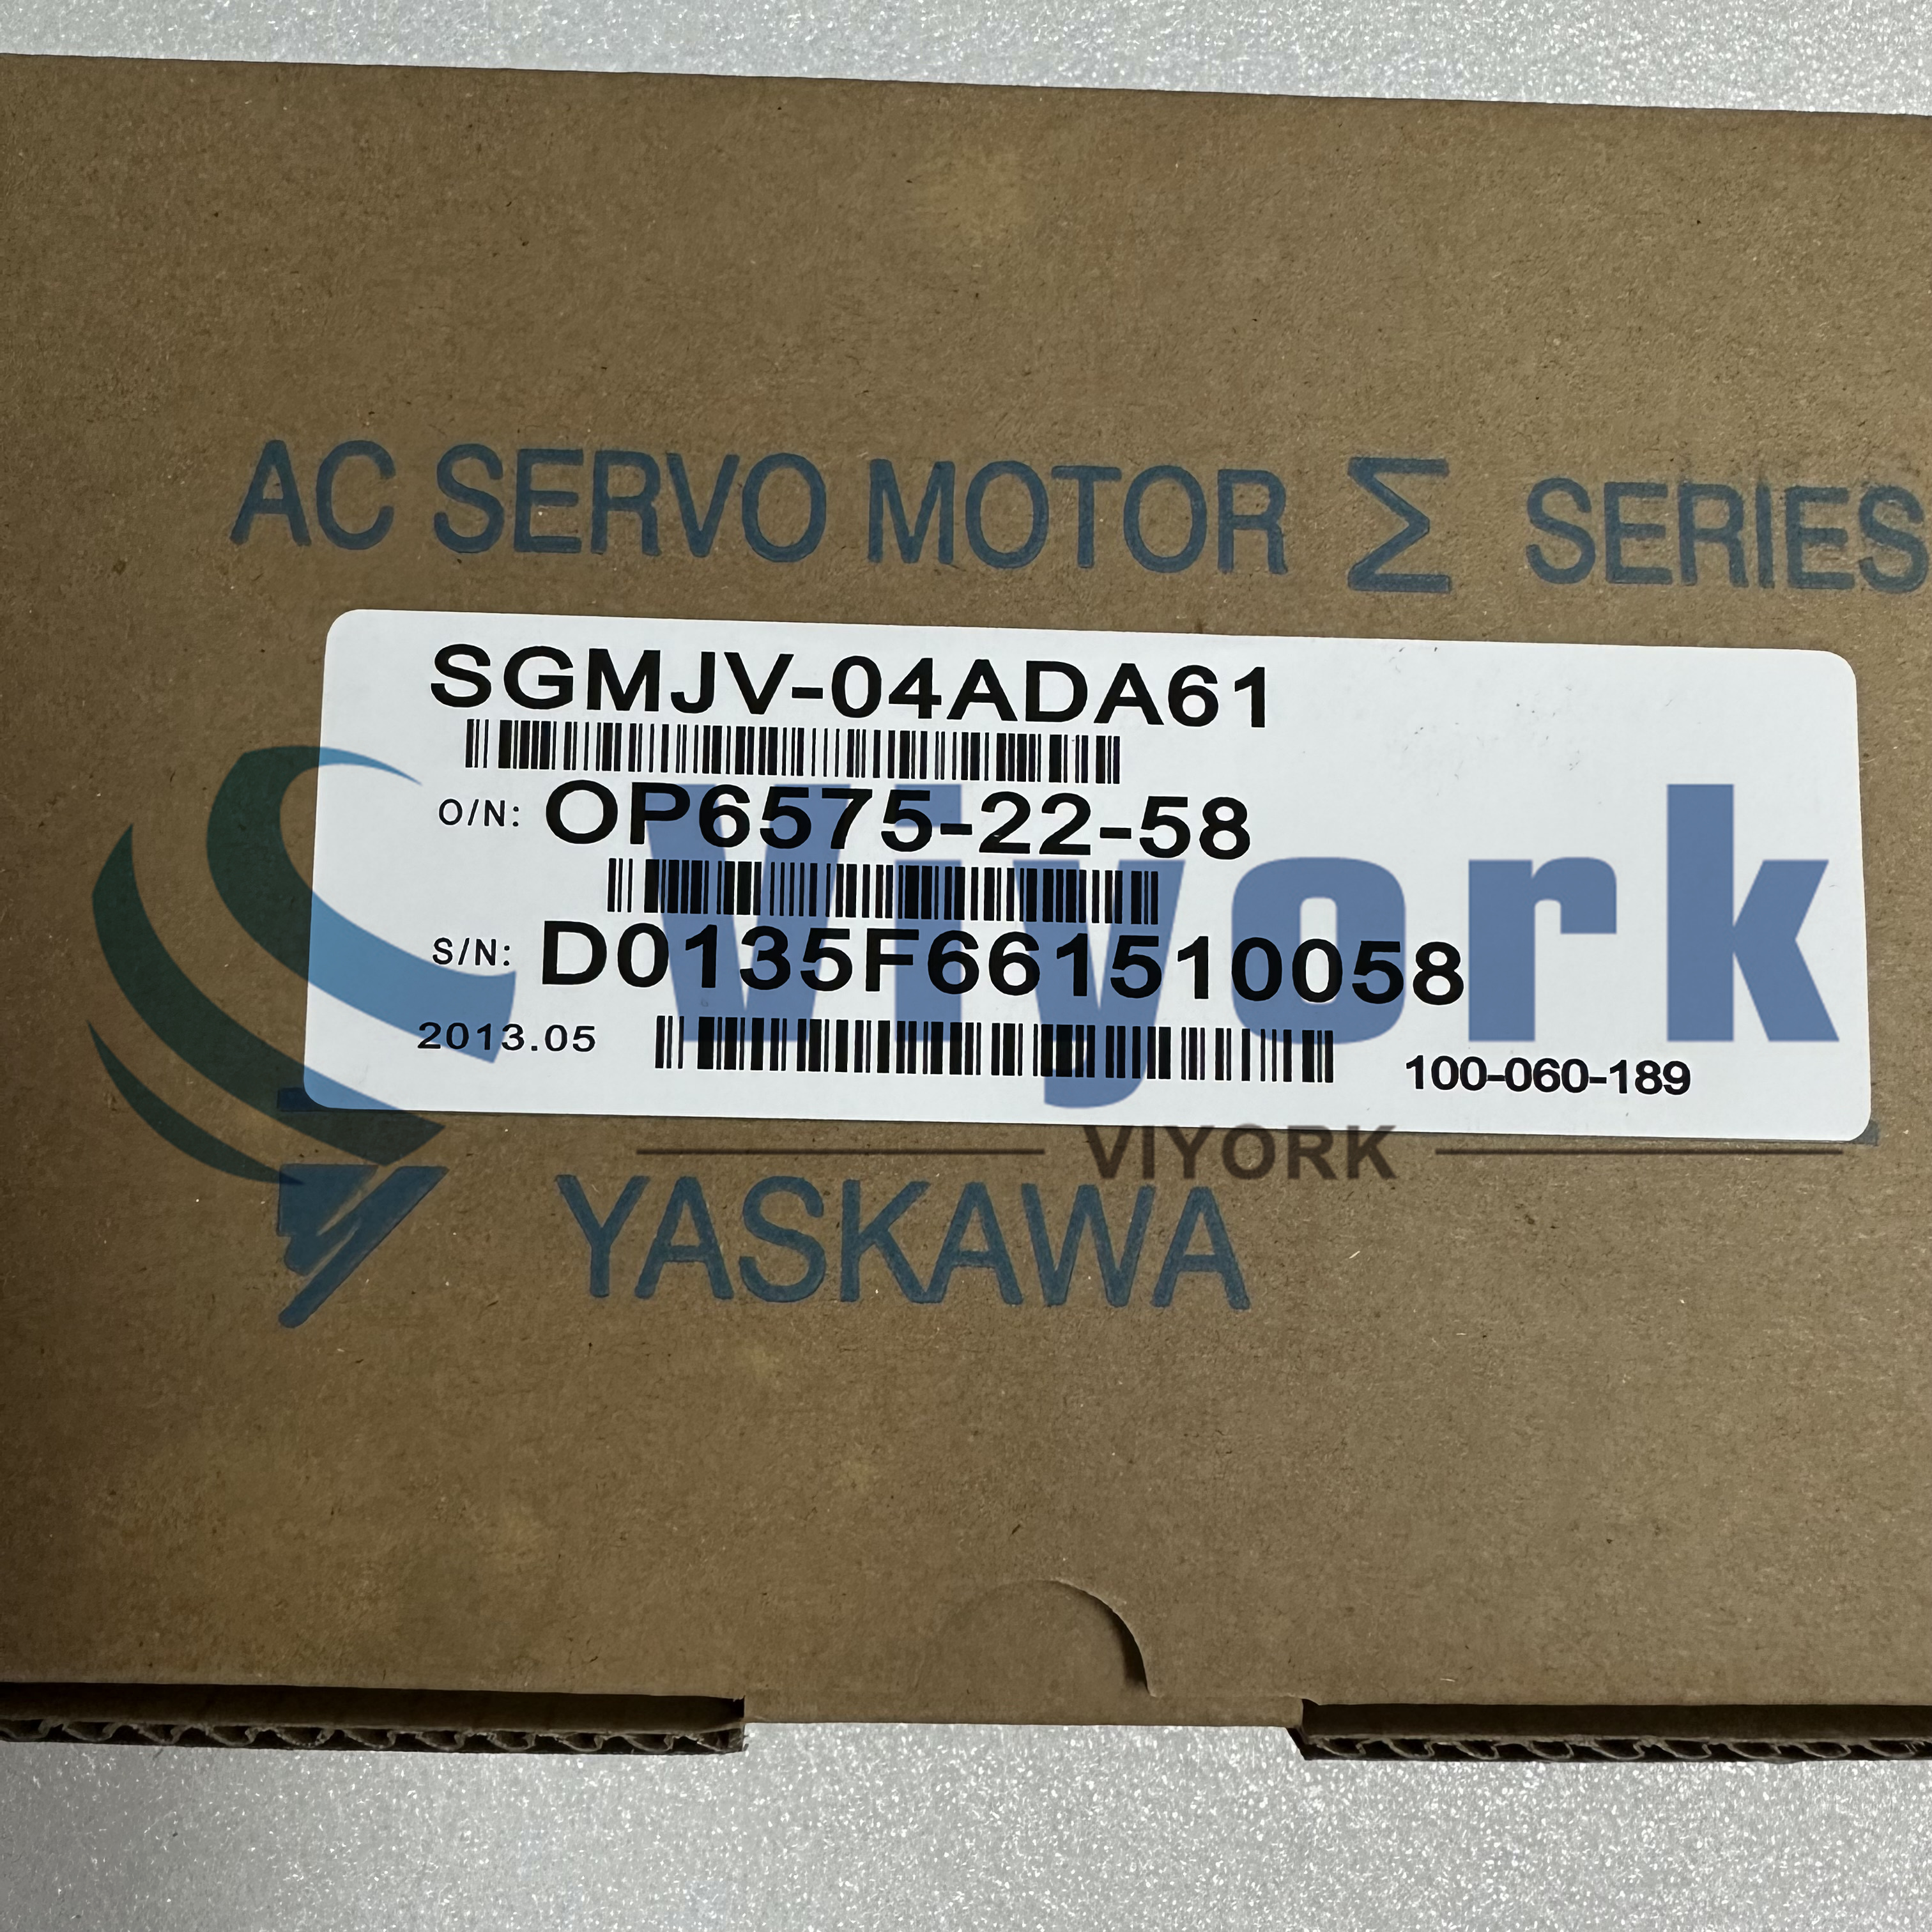 Yaskawa SGMJV-04ADA61 AC SERVO MOTOR NEW